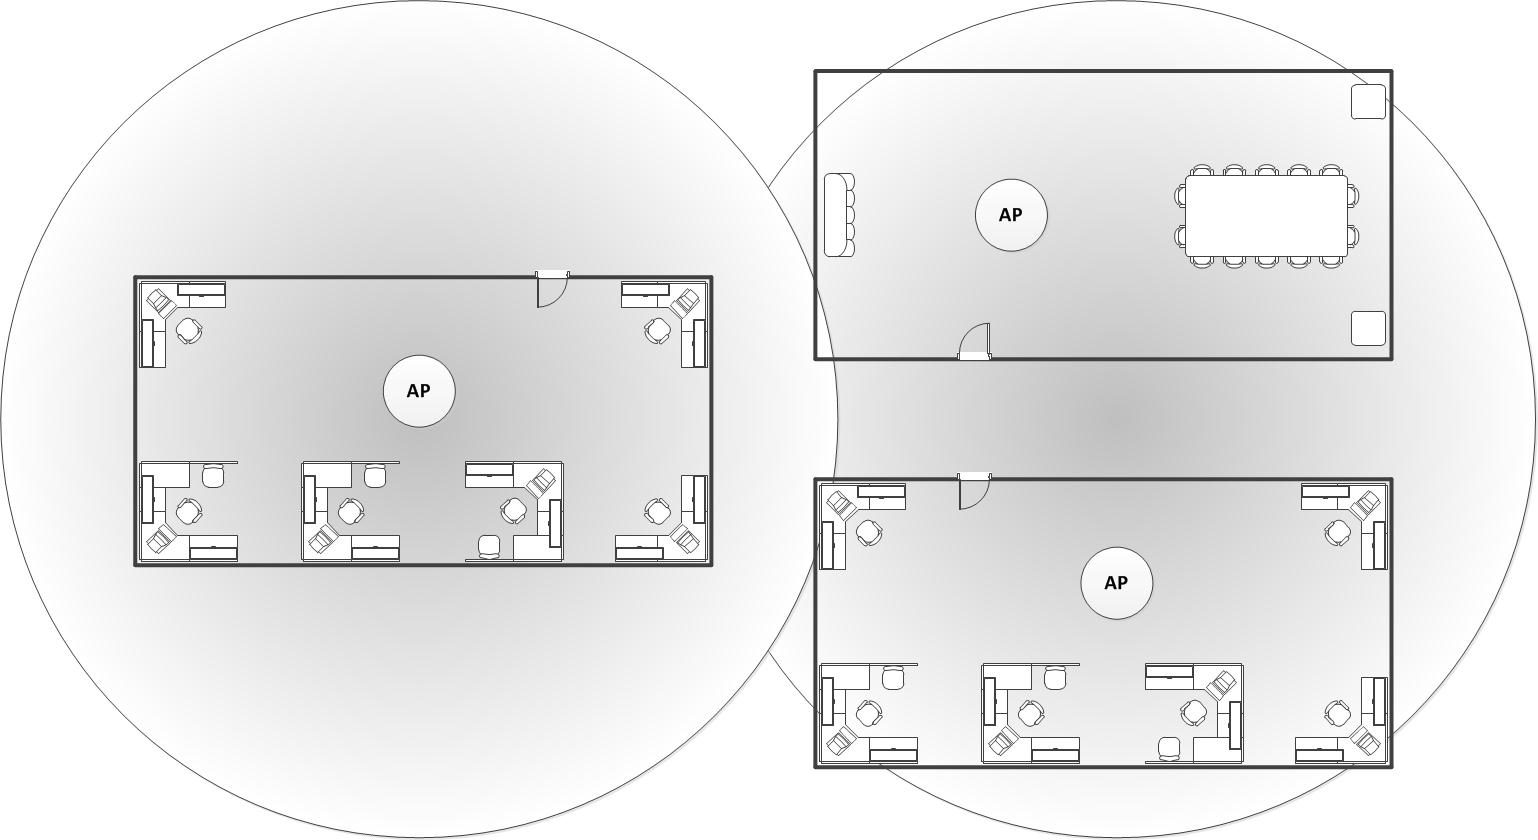 Diagram of AP device placement